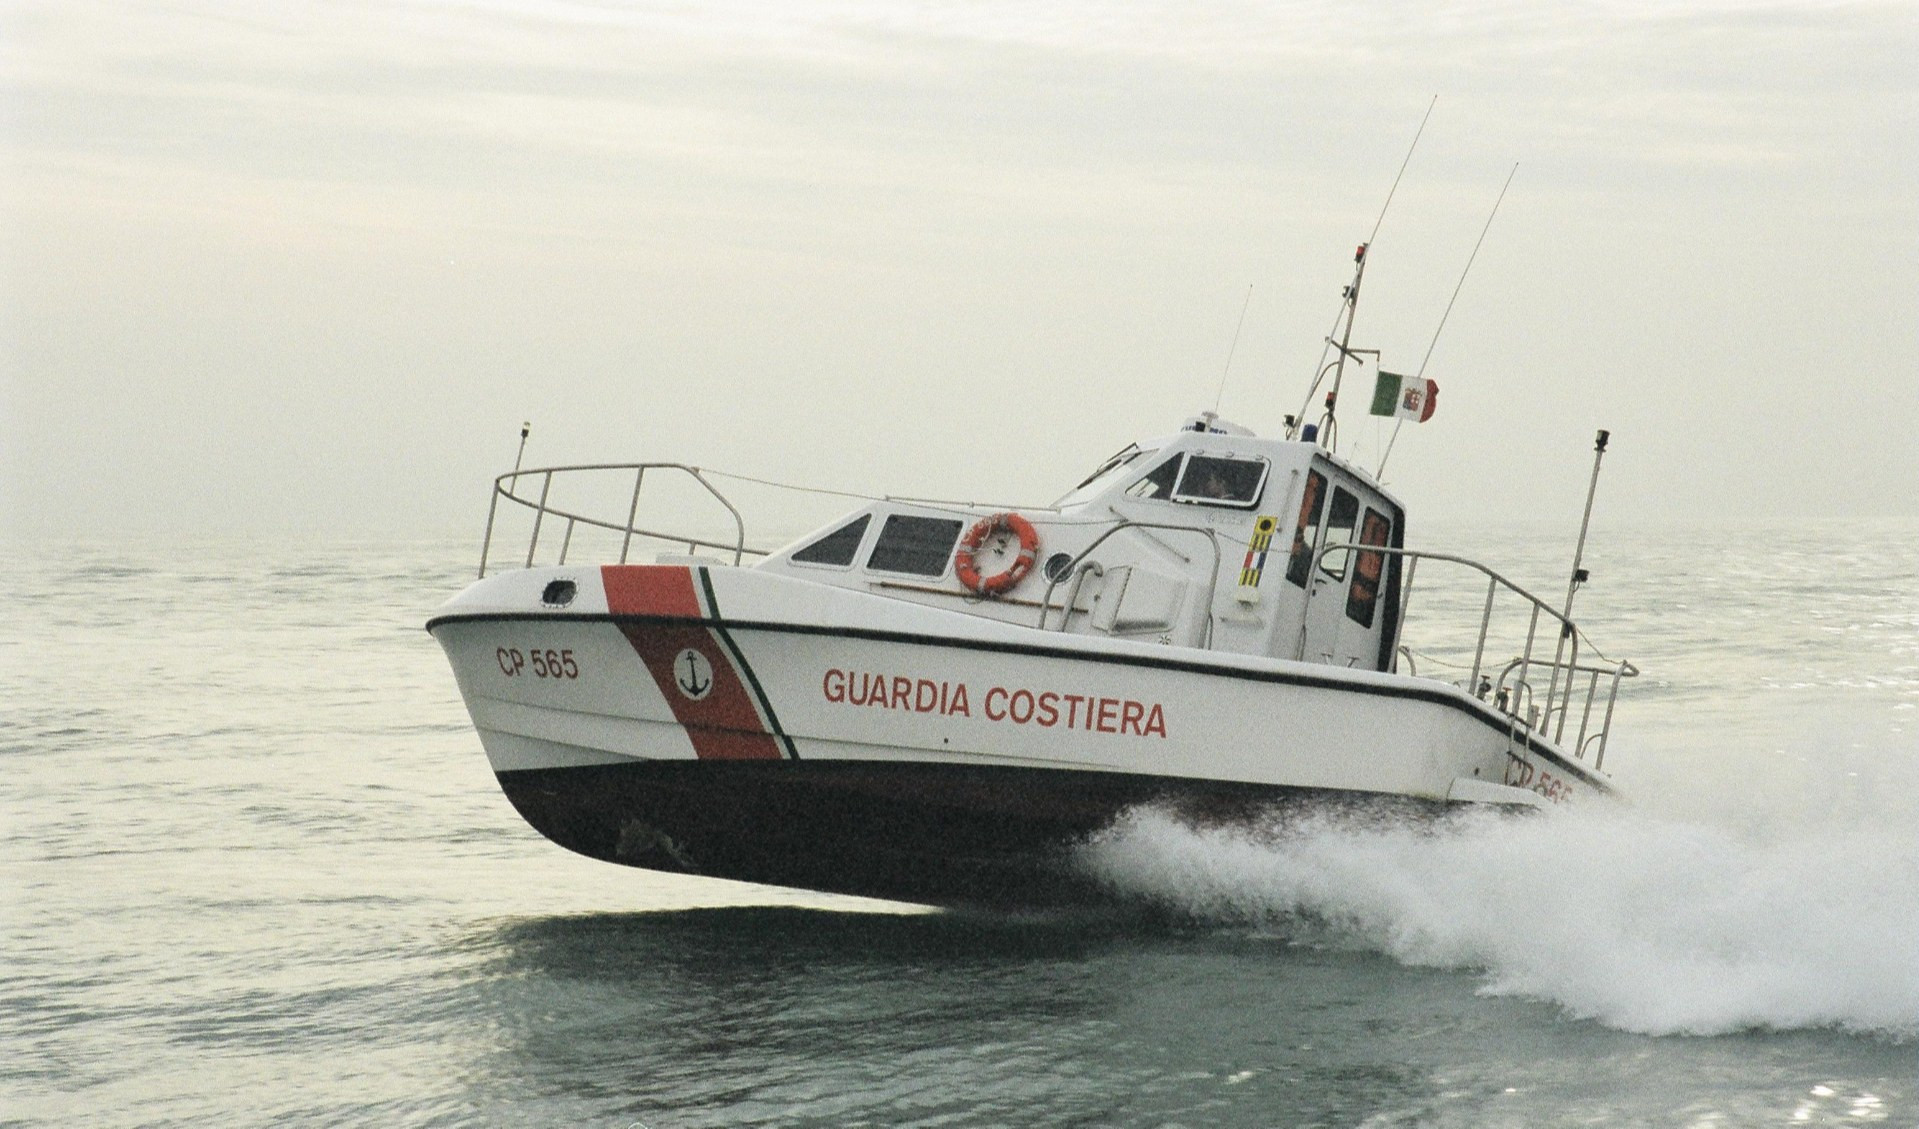 Viola norme salvaguardia vita umana in mare, nave panamense fermata a Genova